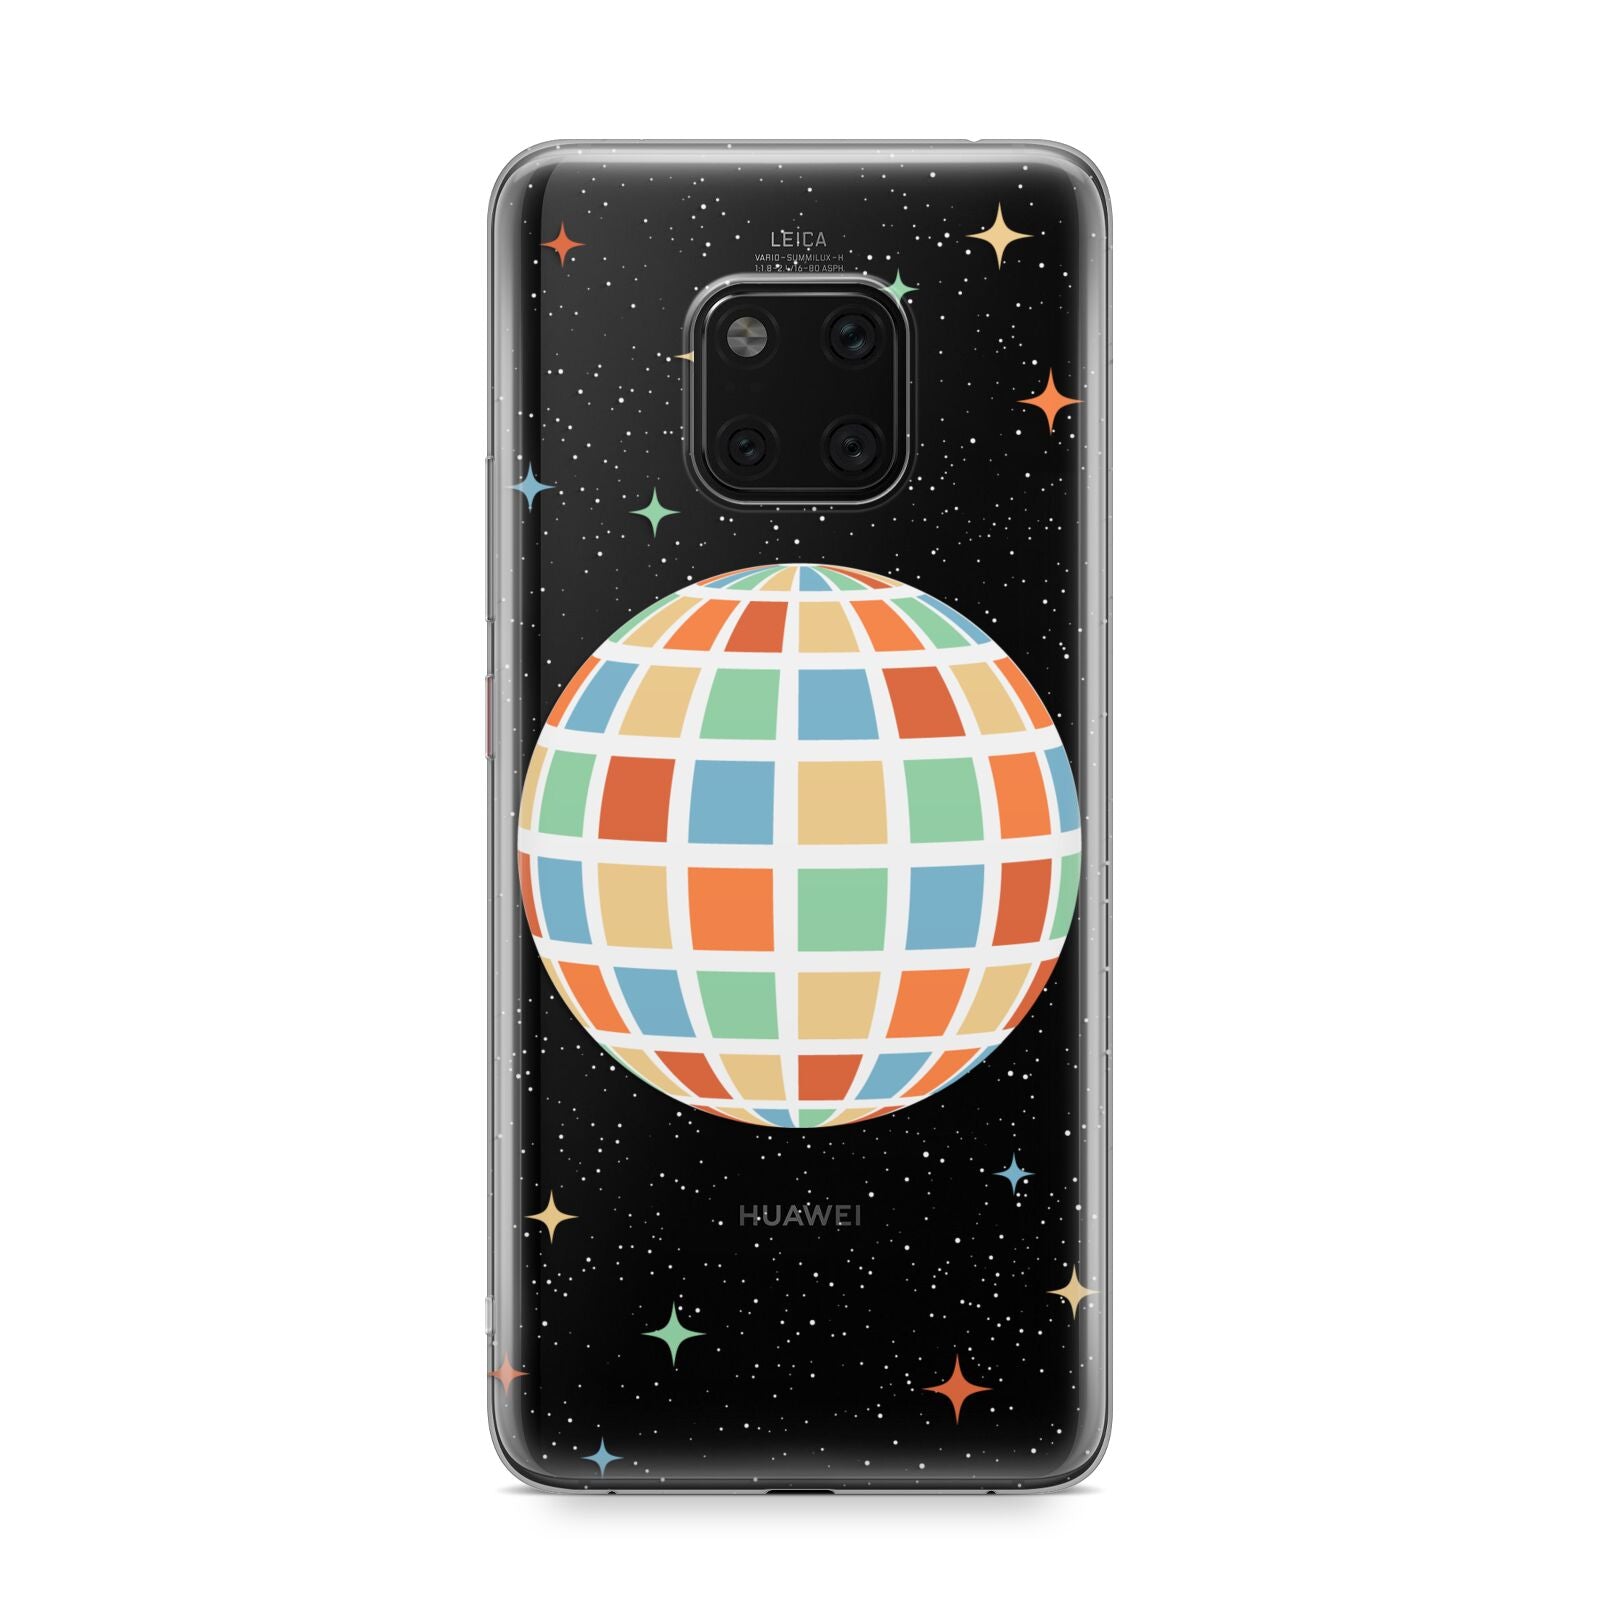 Disco Ball Huawei Mate 20 Pro Phone Case